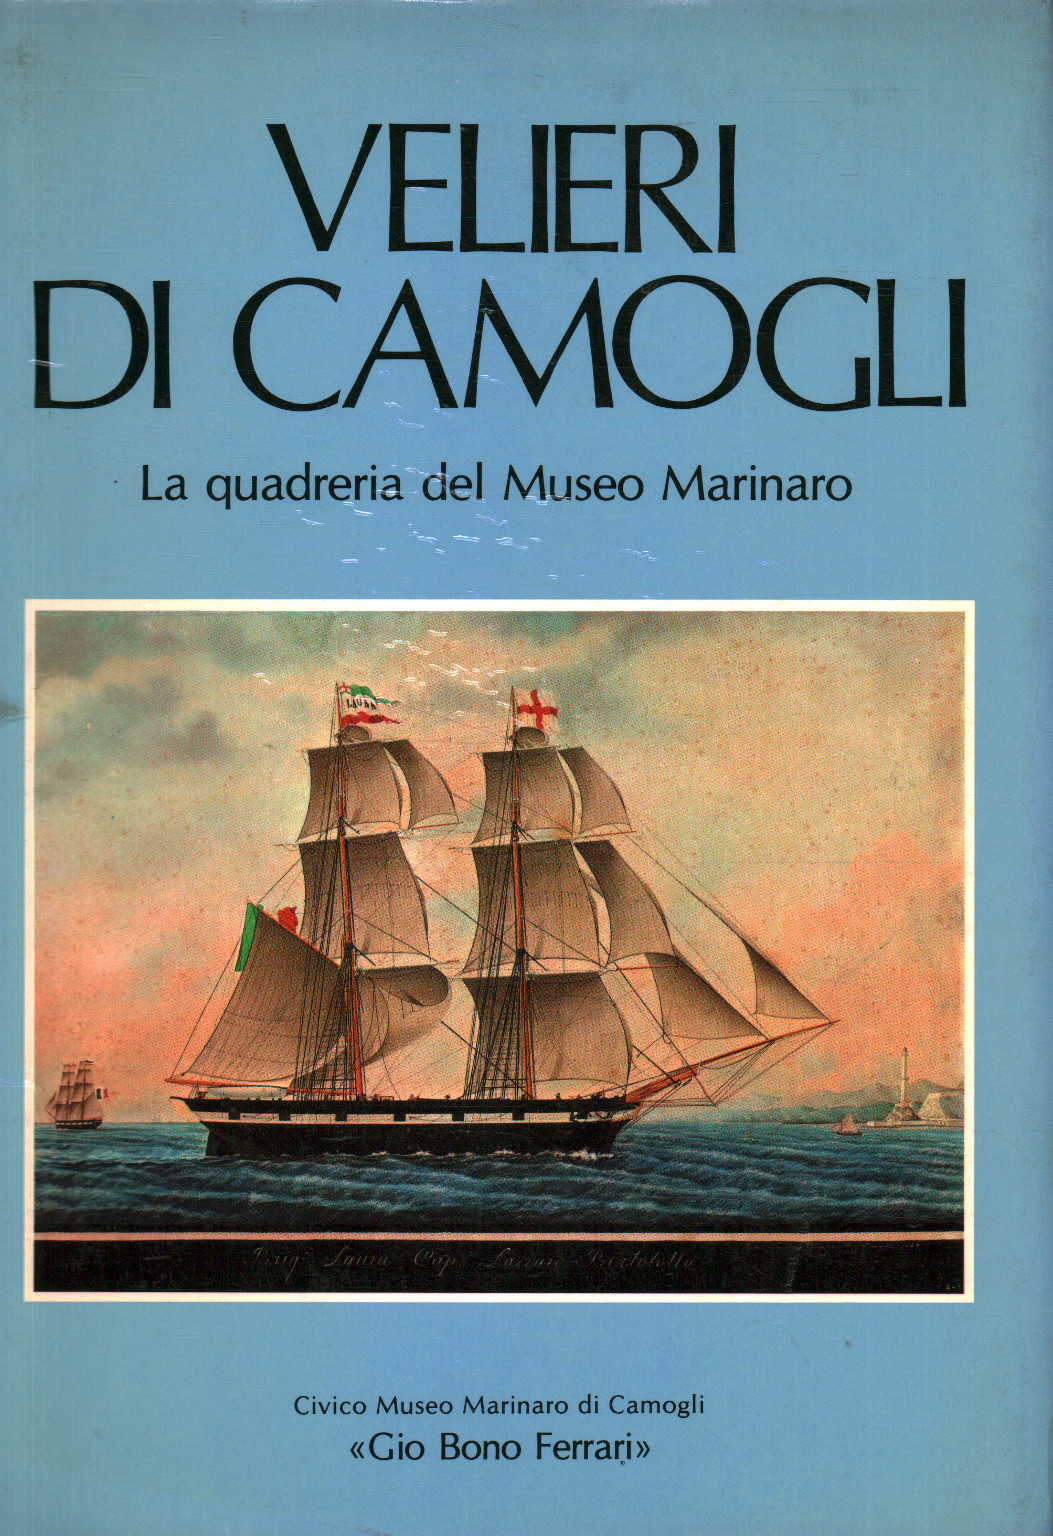 Veleros de Camogli, Museo Cívico Marítimo de Camogli «Gio Bono Ferrari»